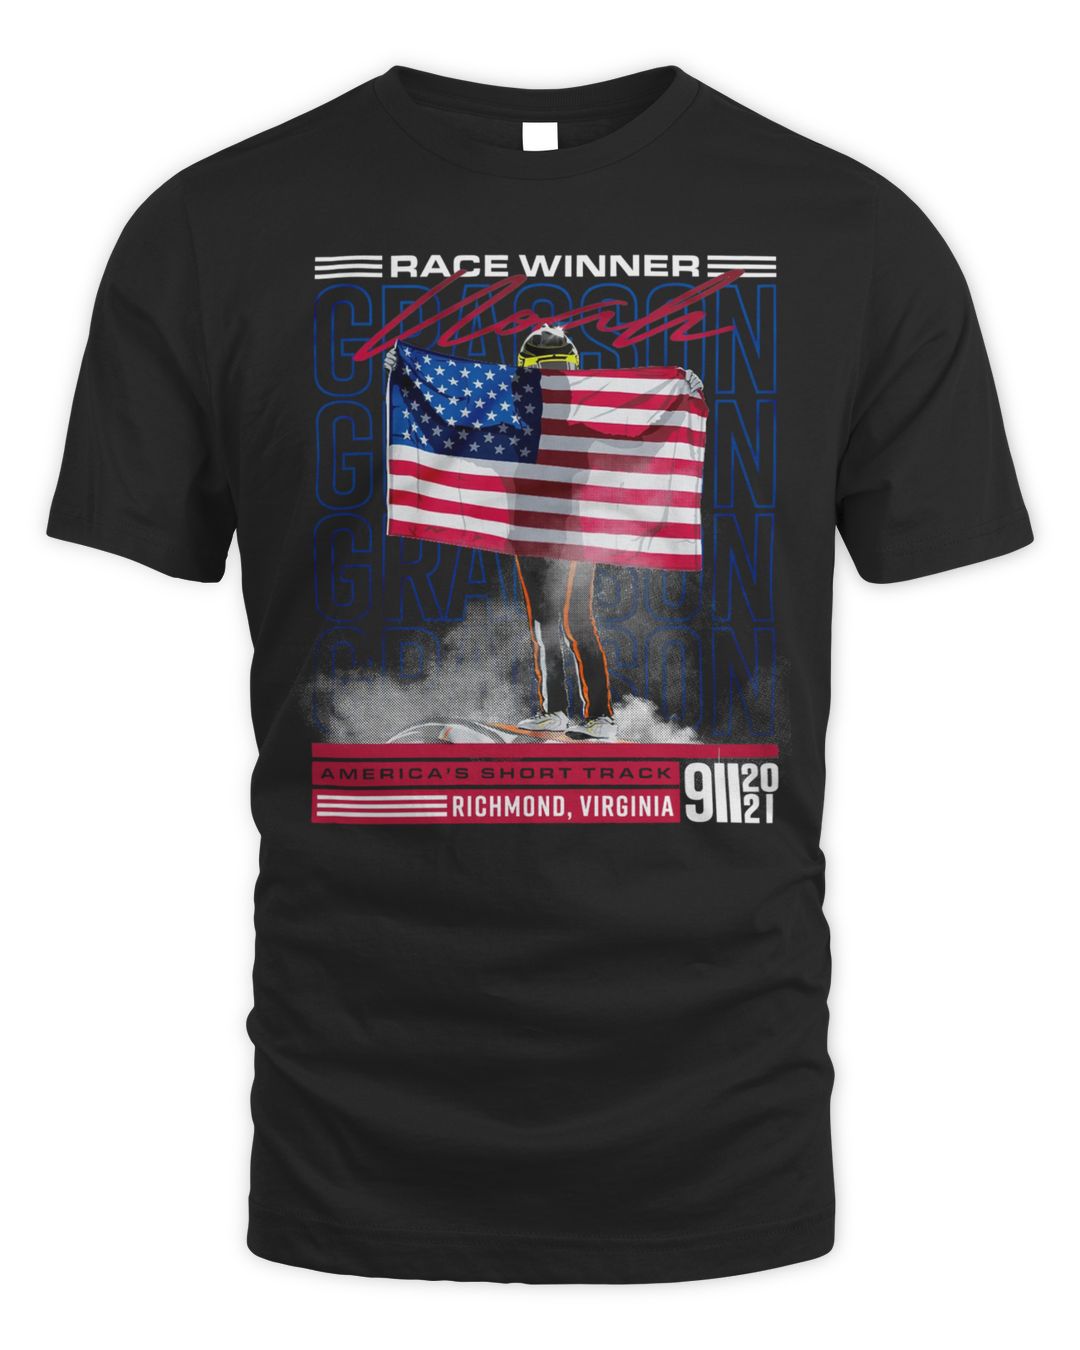 Noah Gragson Merch Americas Short Track Win Shirt